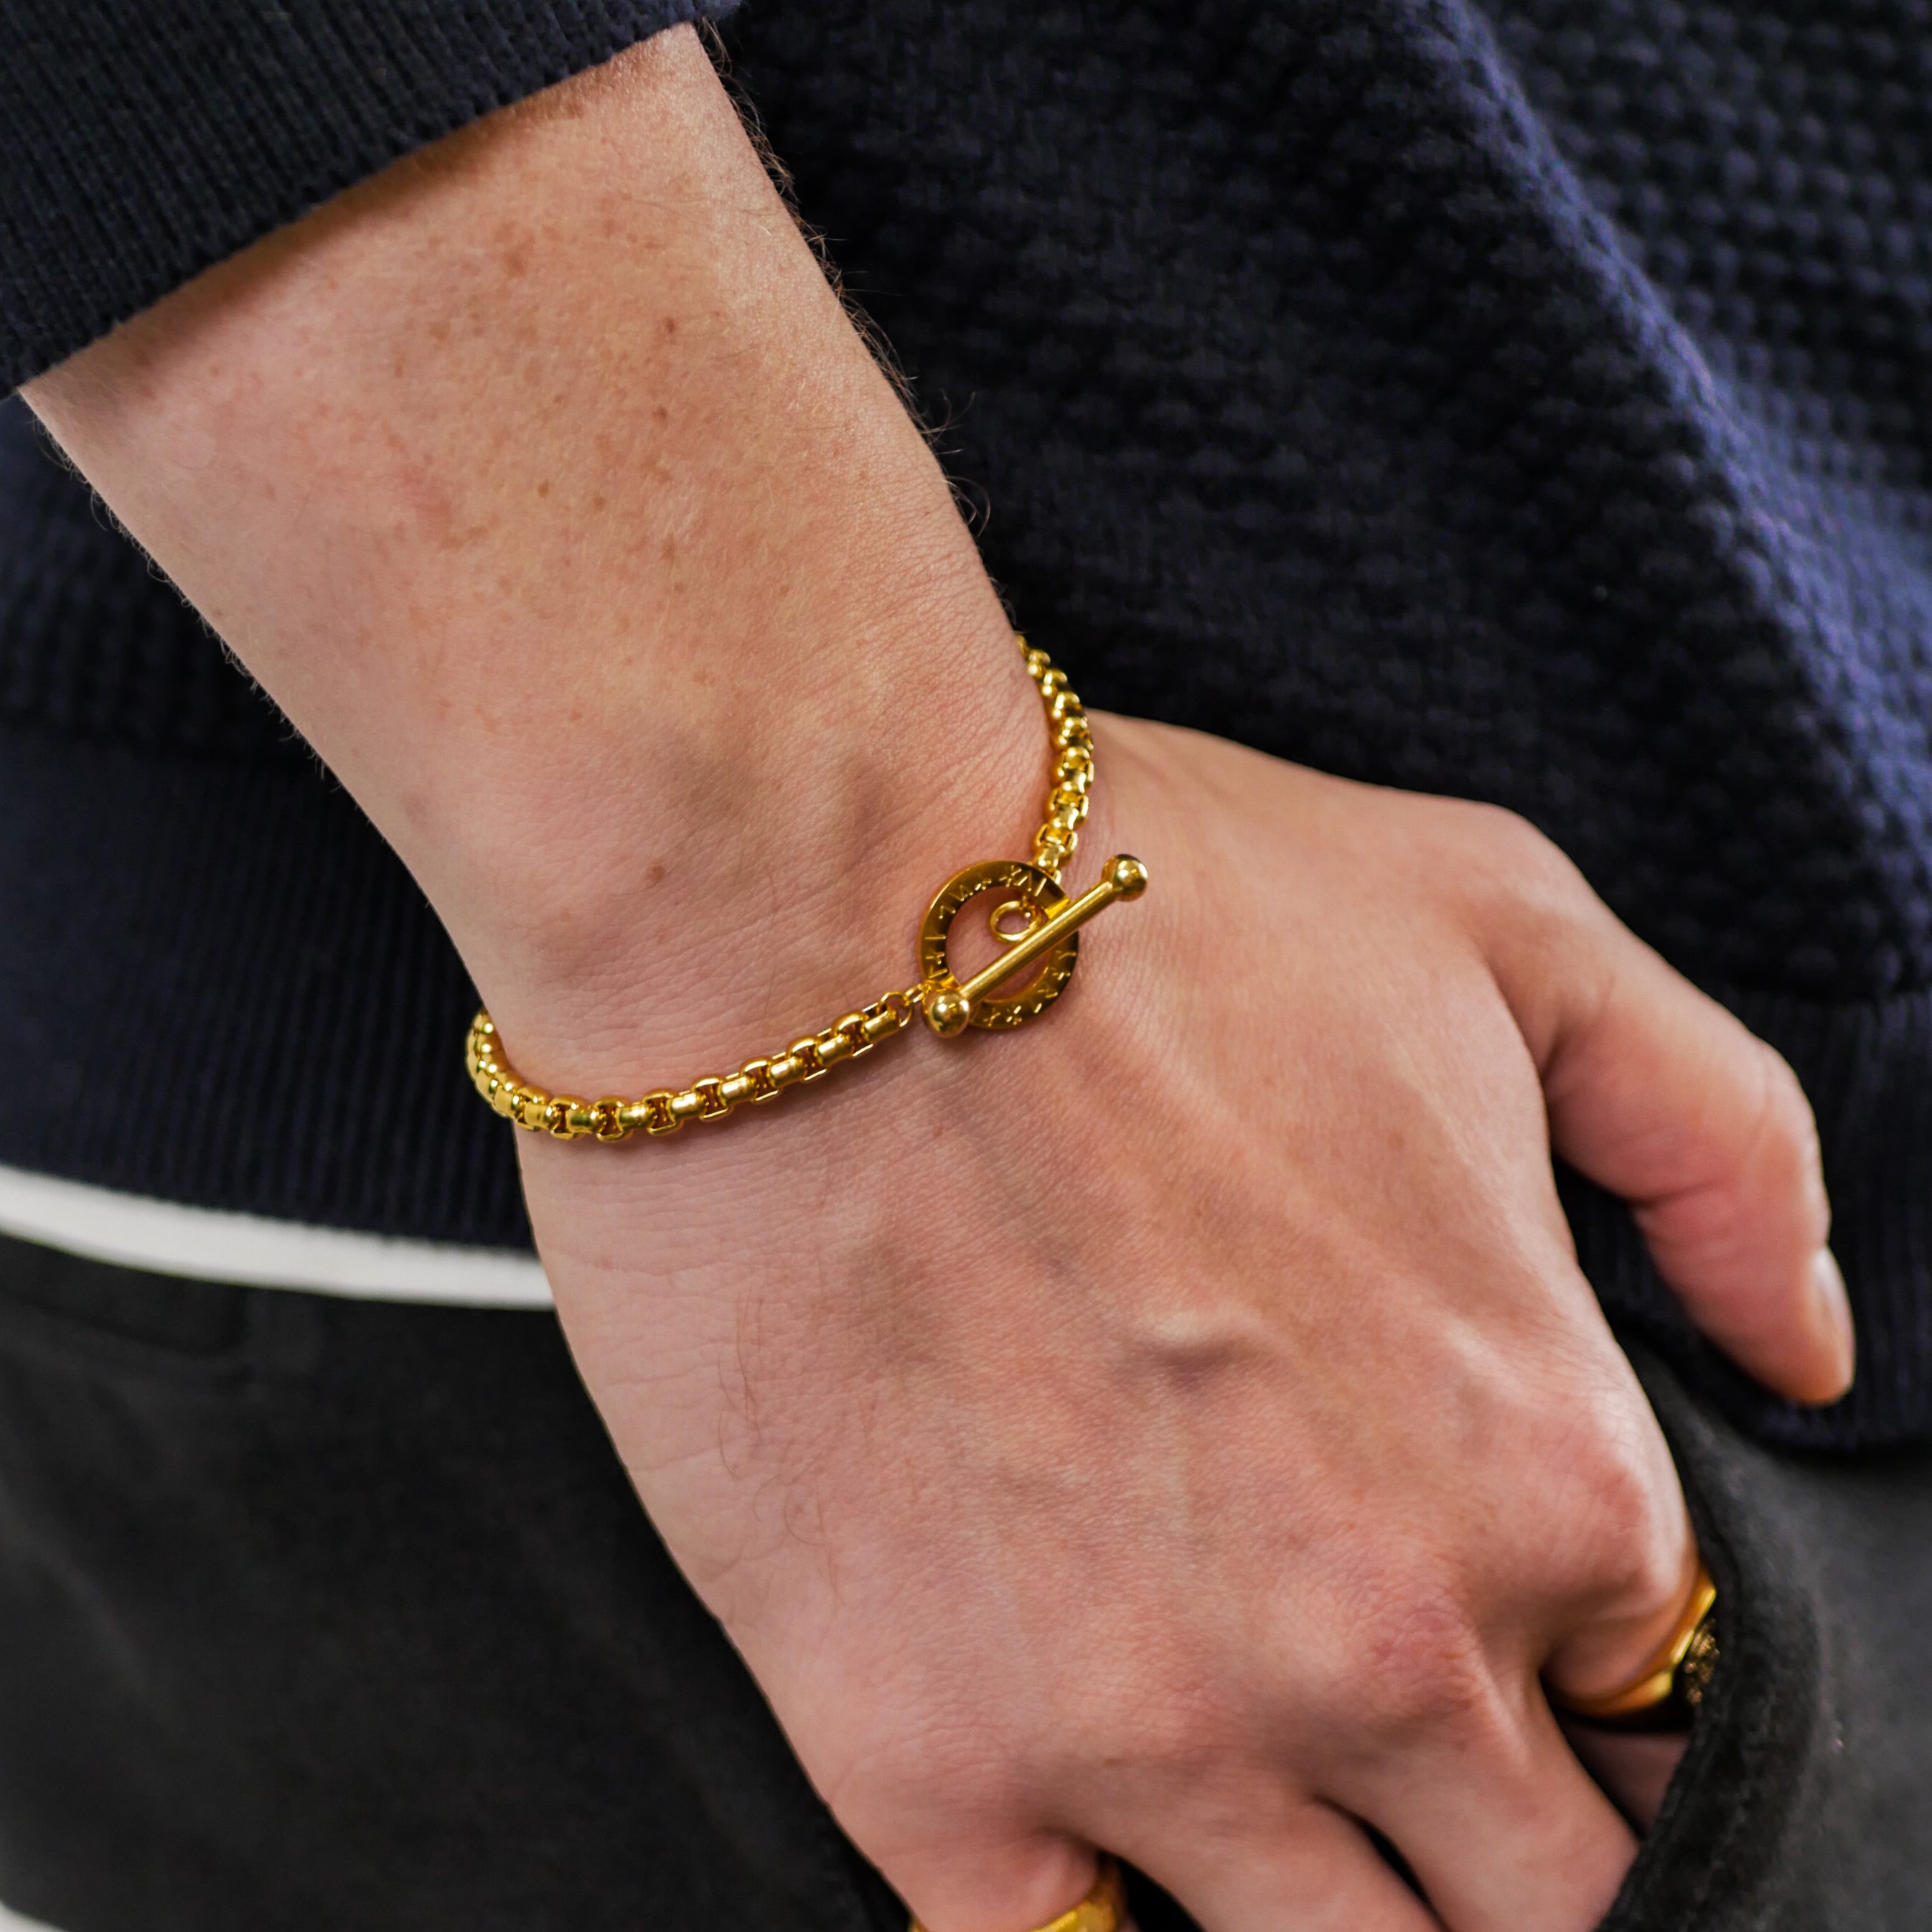 NL Ragnar bracelet - Gold-toned